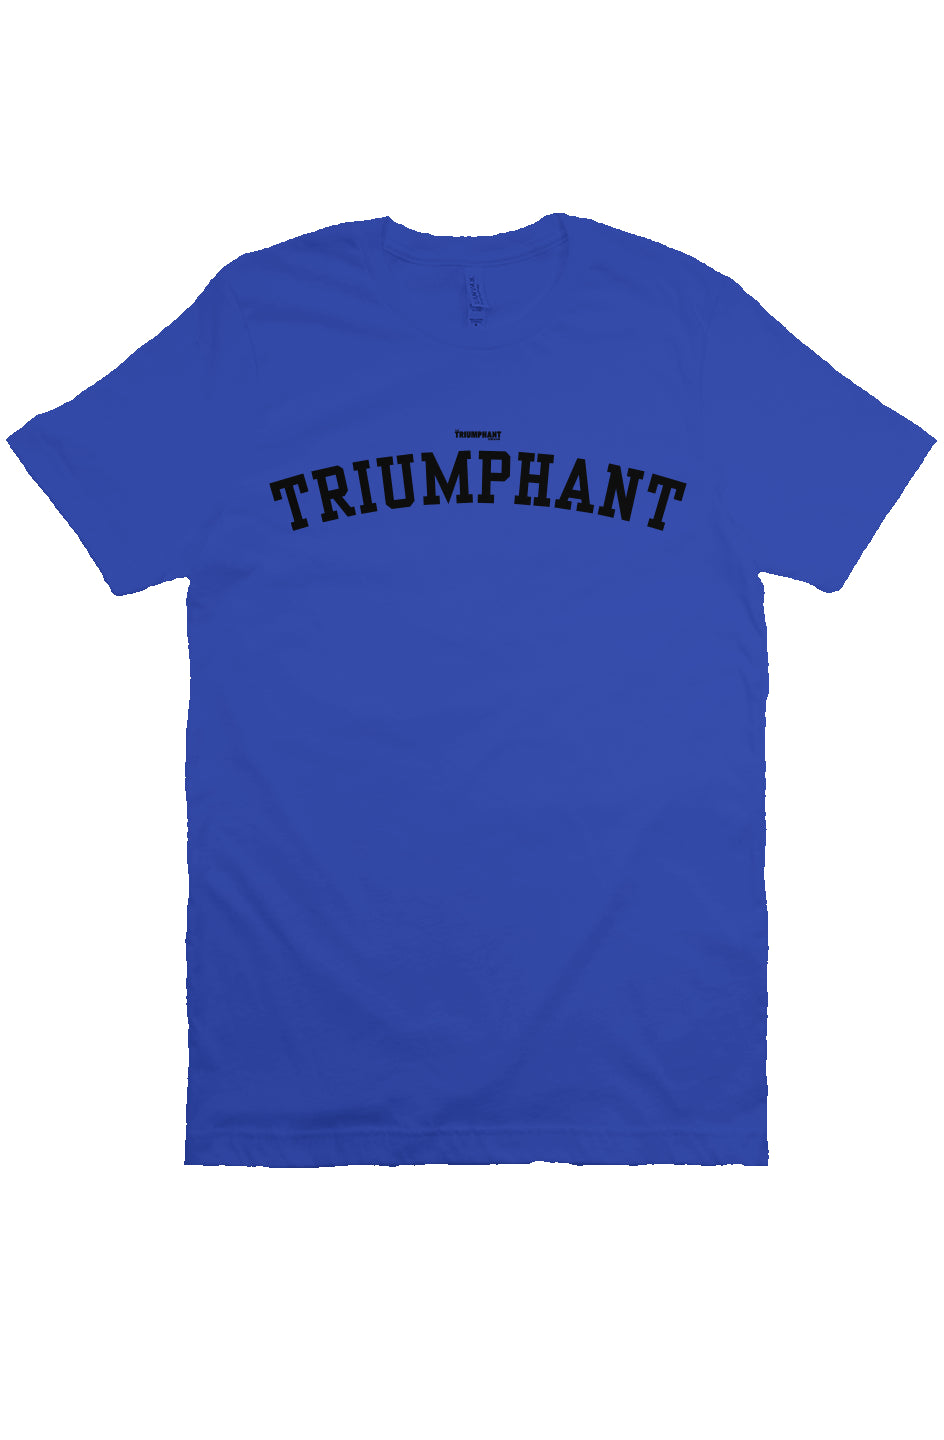 Triumphant | A&D Tee